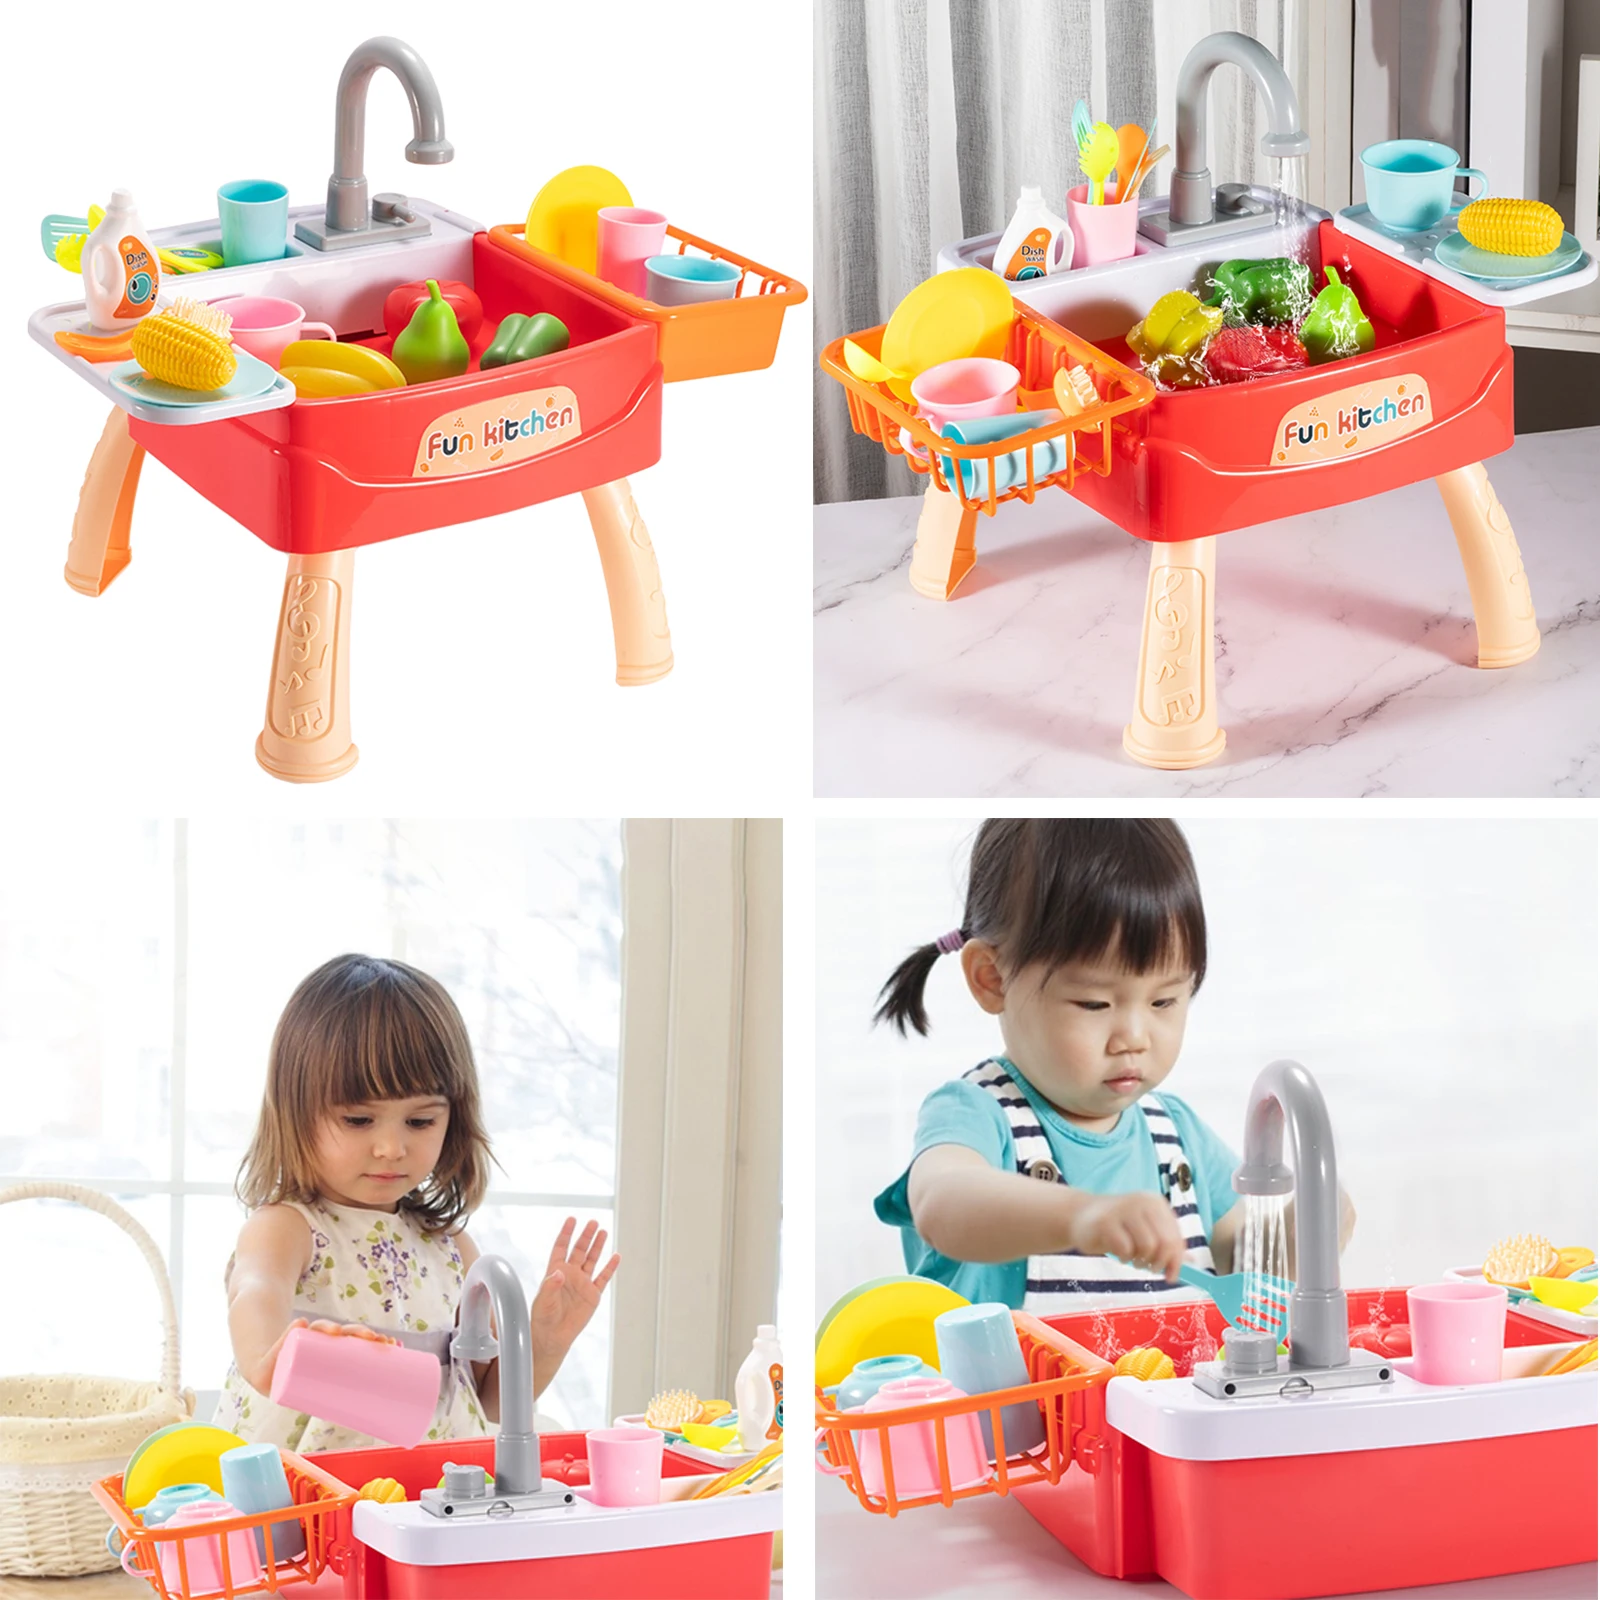 Children Sink Dishwashing Set Toy Kid Simulated Kitchen Toy Set Educational Play House Games Prop Sink Wash Suit Montessori Toy